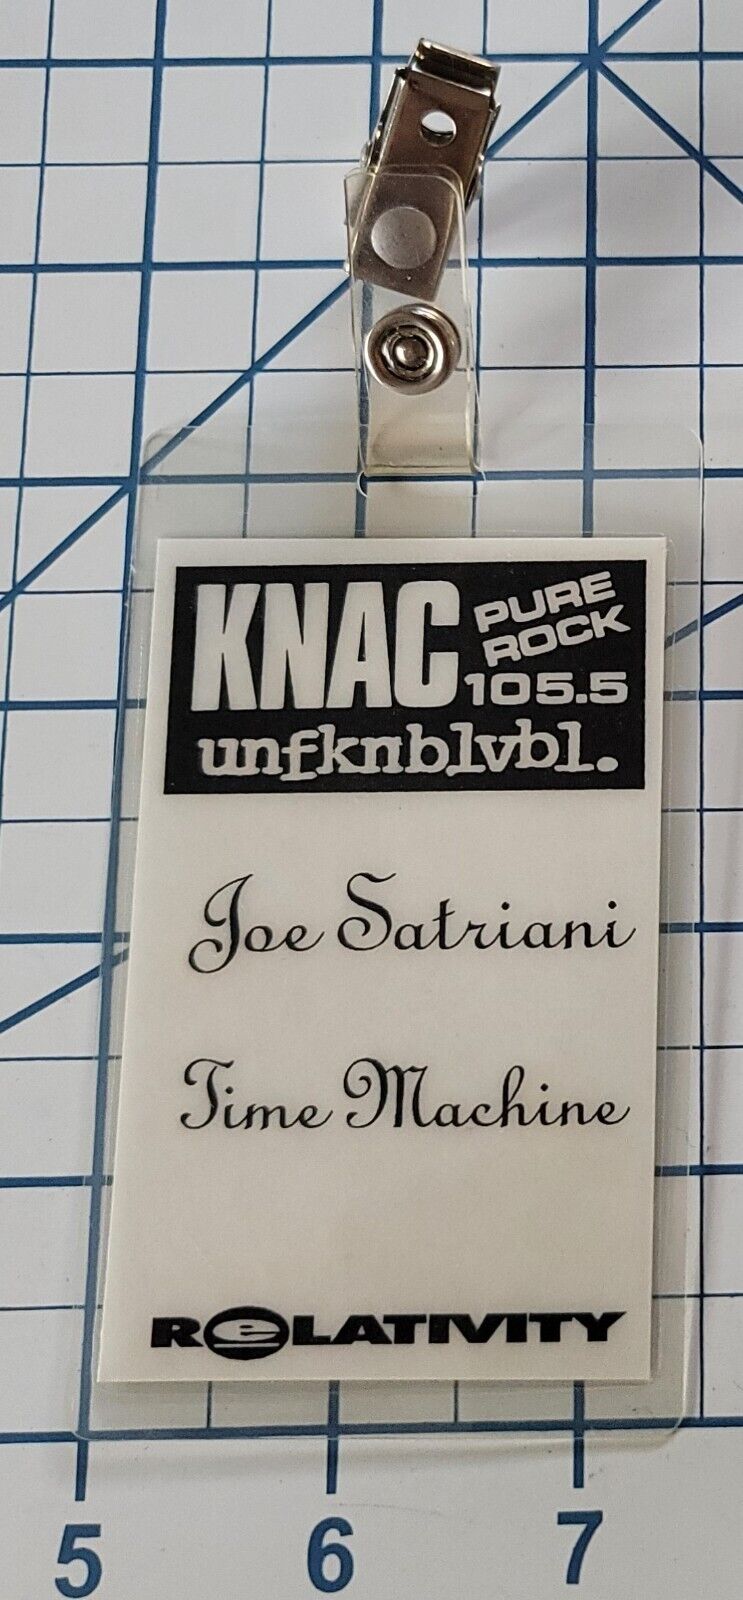 VTG LA Heavy Metal Radio Station KNAC 105.5 Badge w Joe Satriani Time Machine